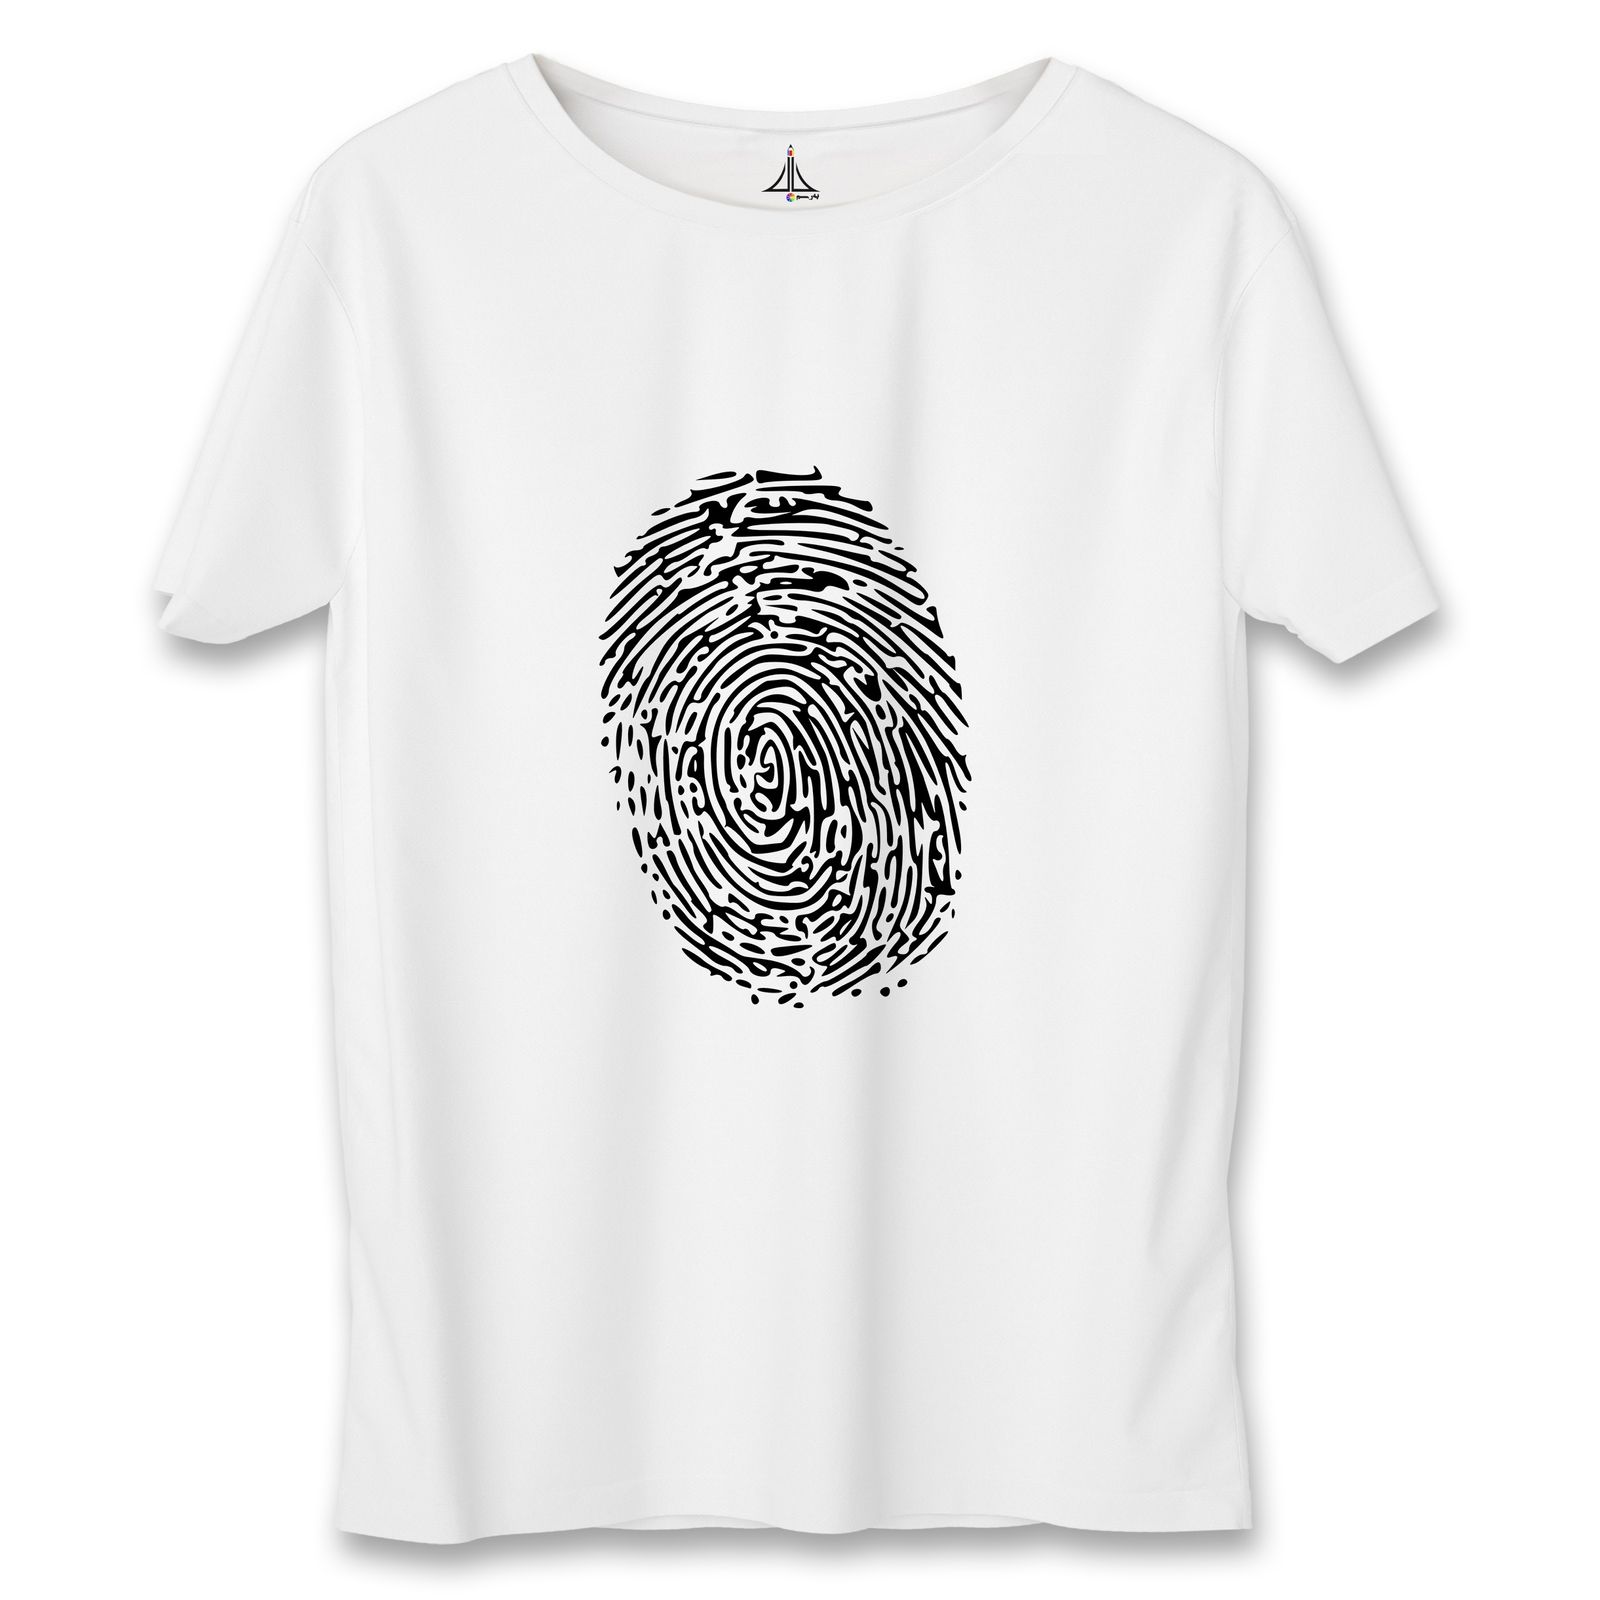 تی شرت زنانه به رسم طرح اثر انگشت کد 5553 -  - 1